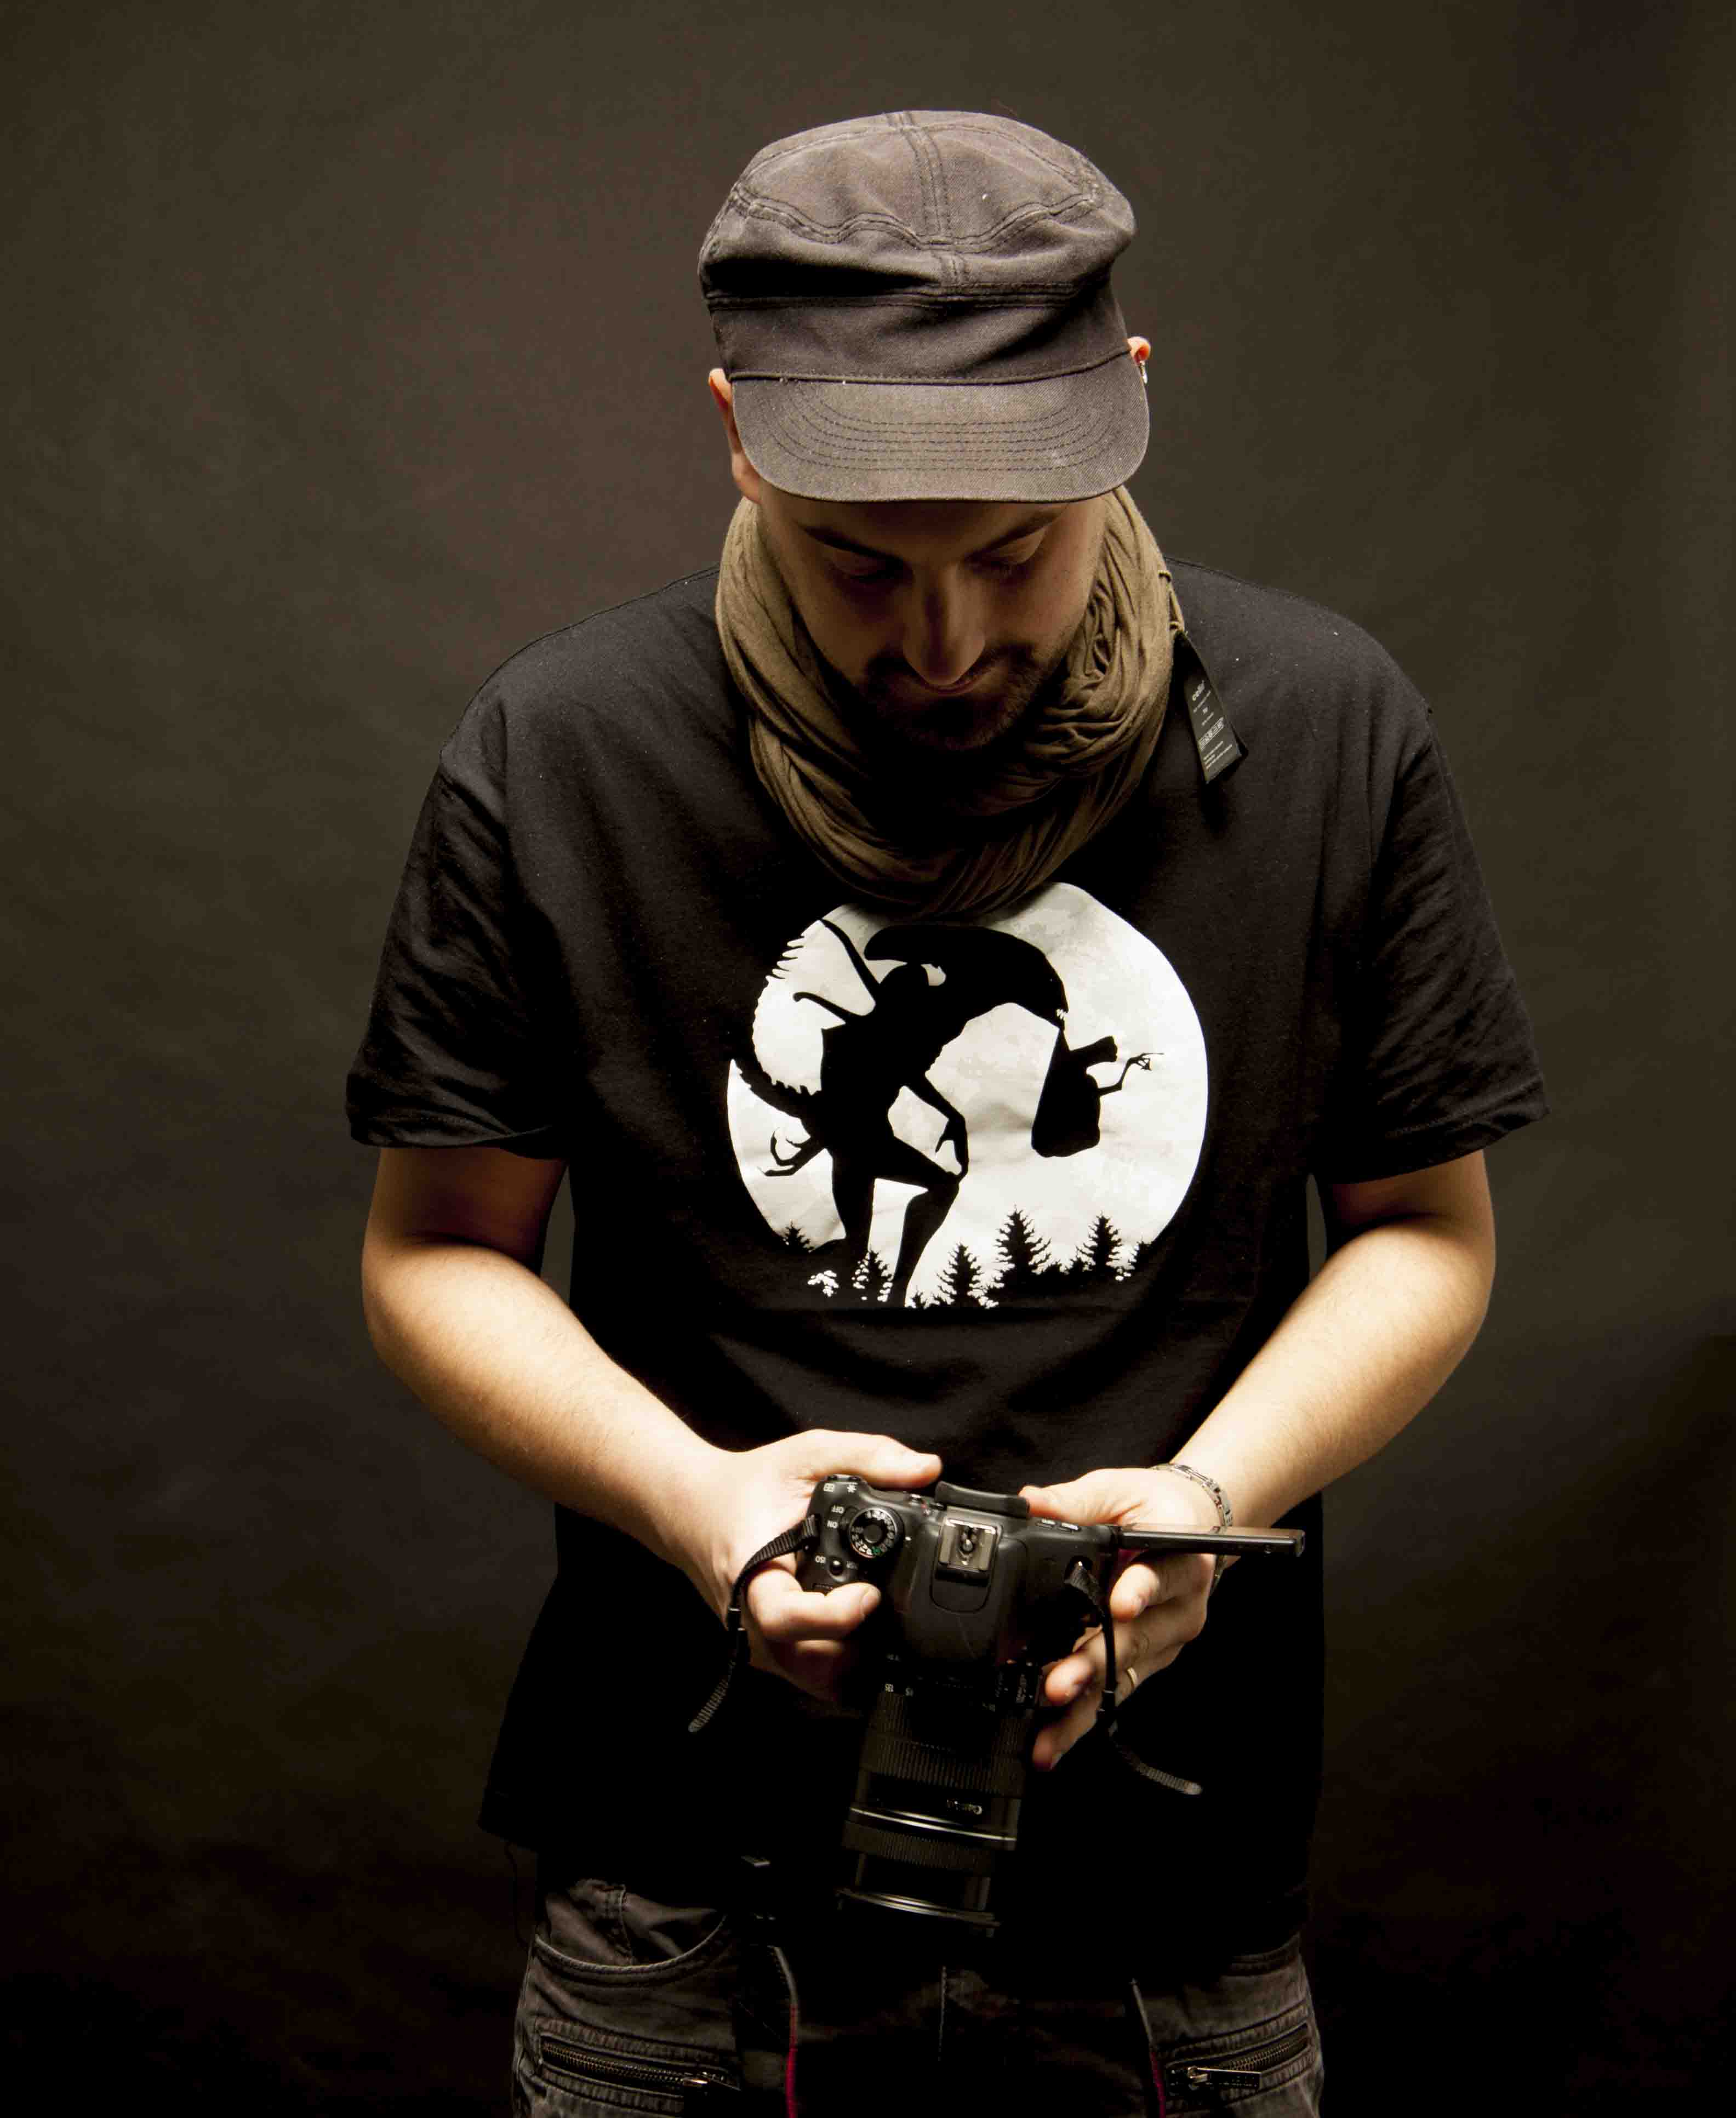 Michael.D / Artiste Photographe